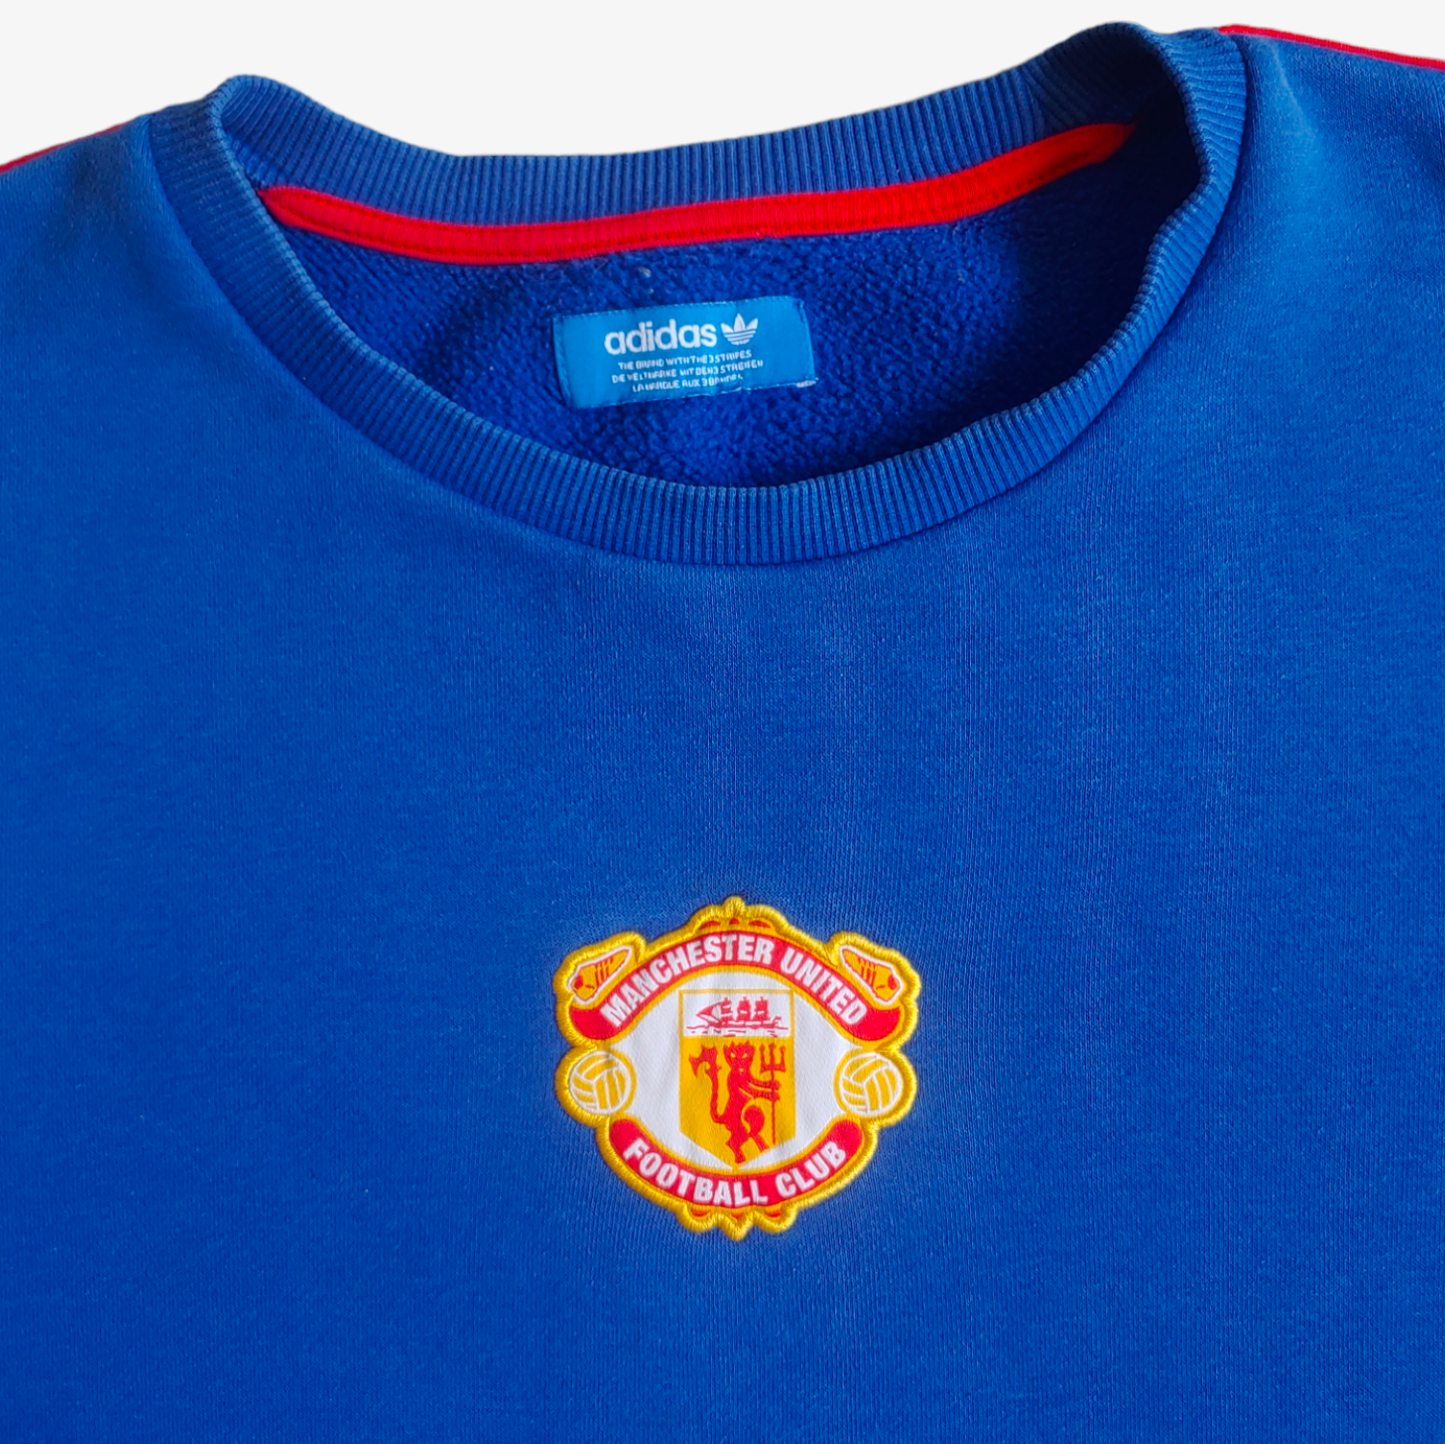 Retro Adidas Originals Manchester United Football Club Blue Crewneck Sweatshirt Badge - Casspios Dream